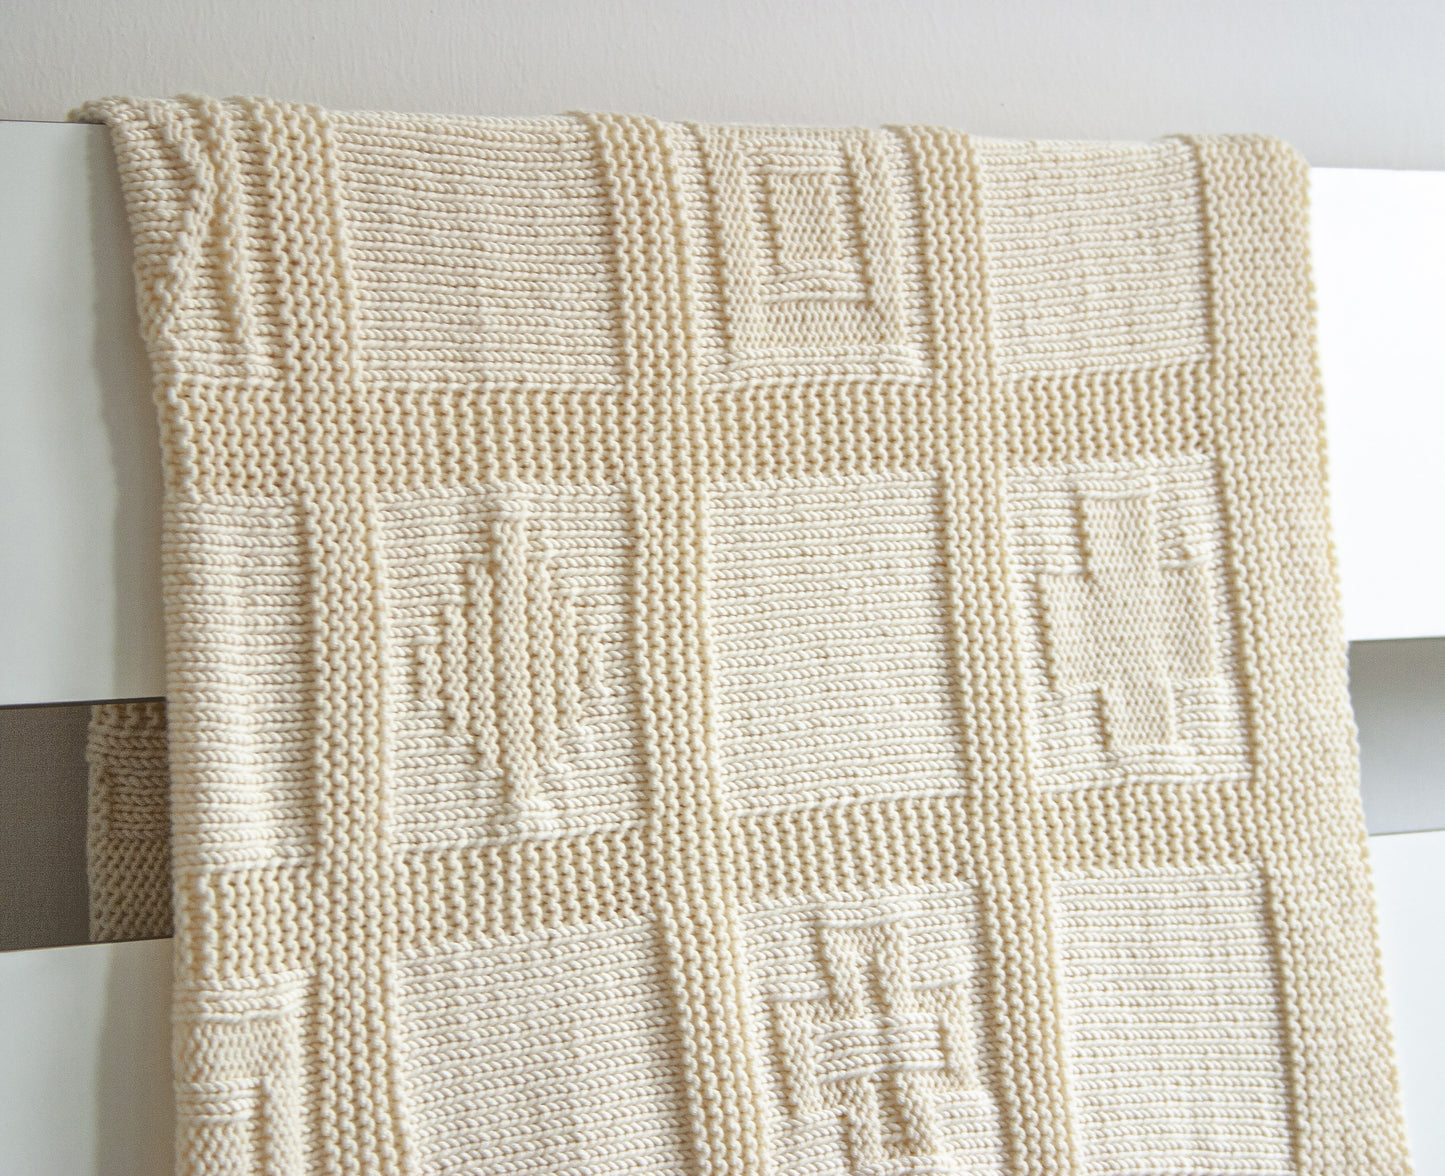 white merino wool yarn hand-knitted baby blanket in geometrical knitting pattern